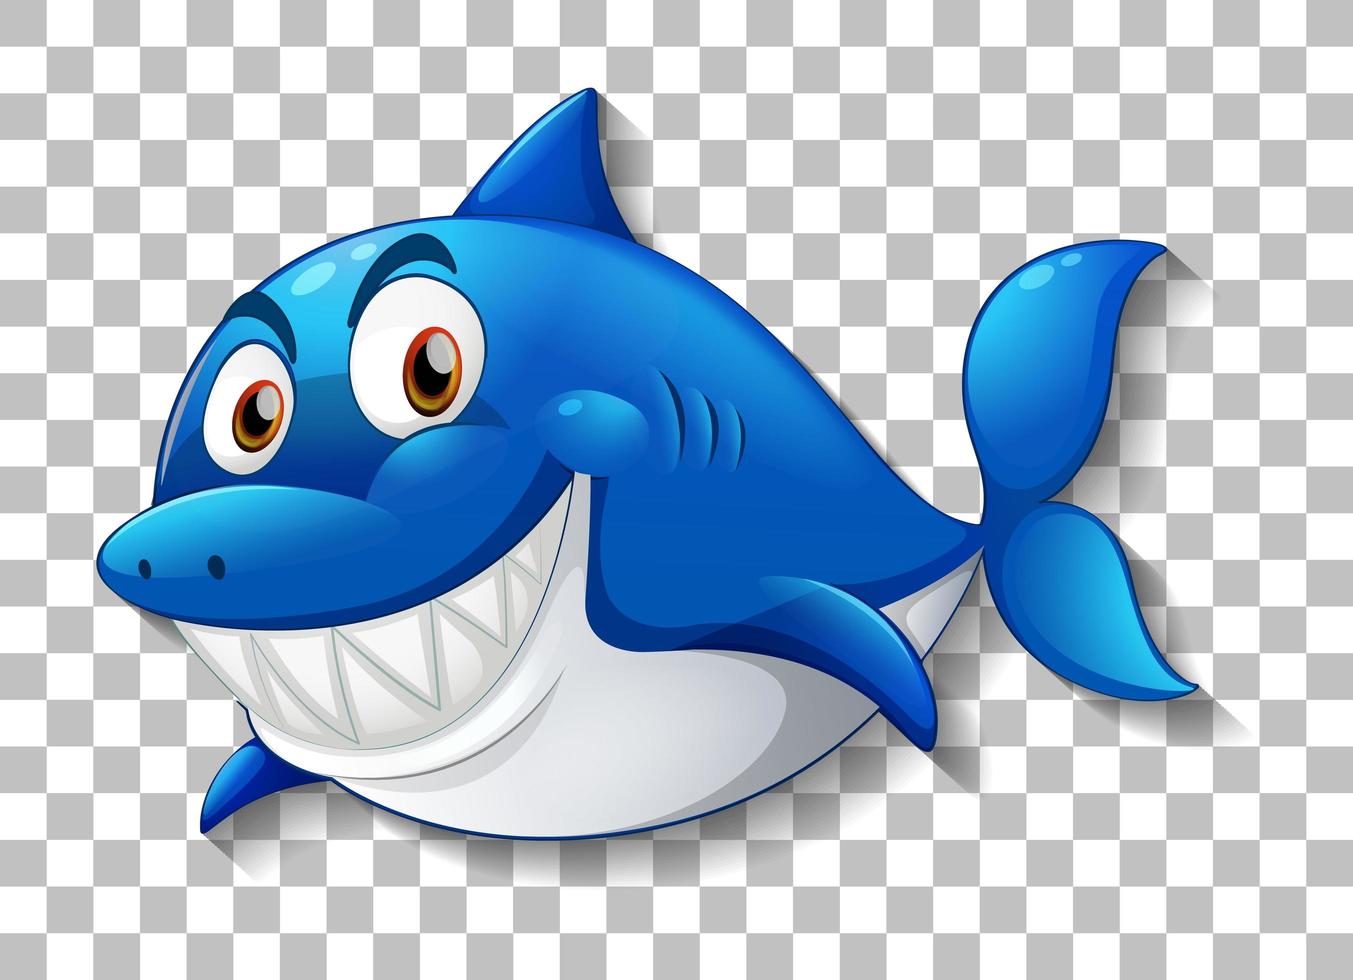 Shark smiling cartoon character vector